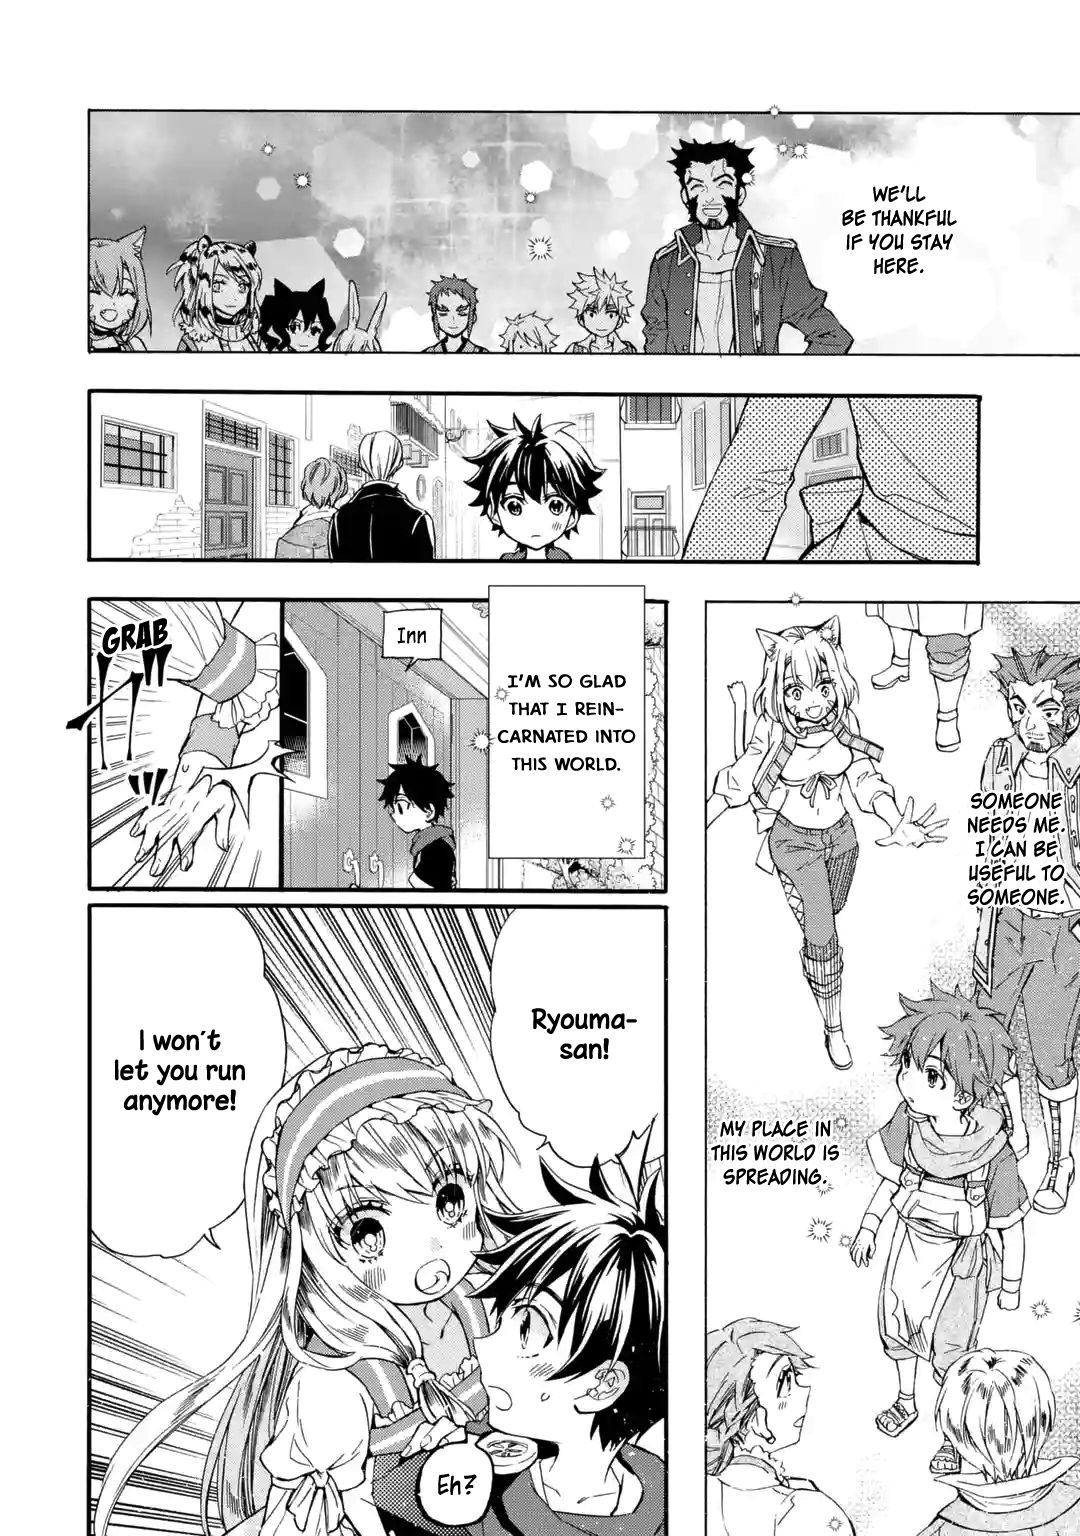 Read Manga Kamitachi Ni Hirowareta Otoko - Chapter 12